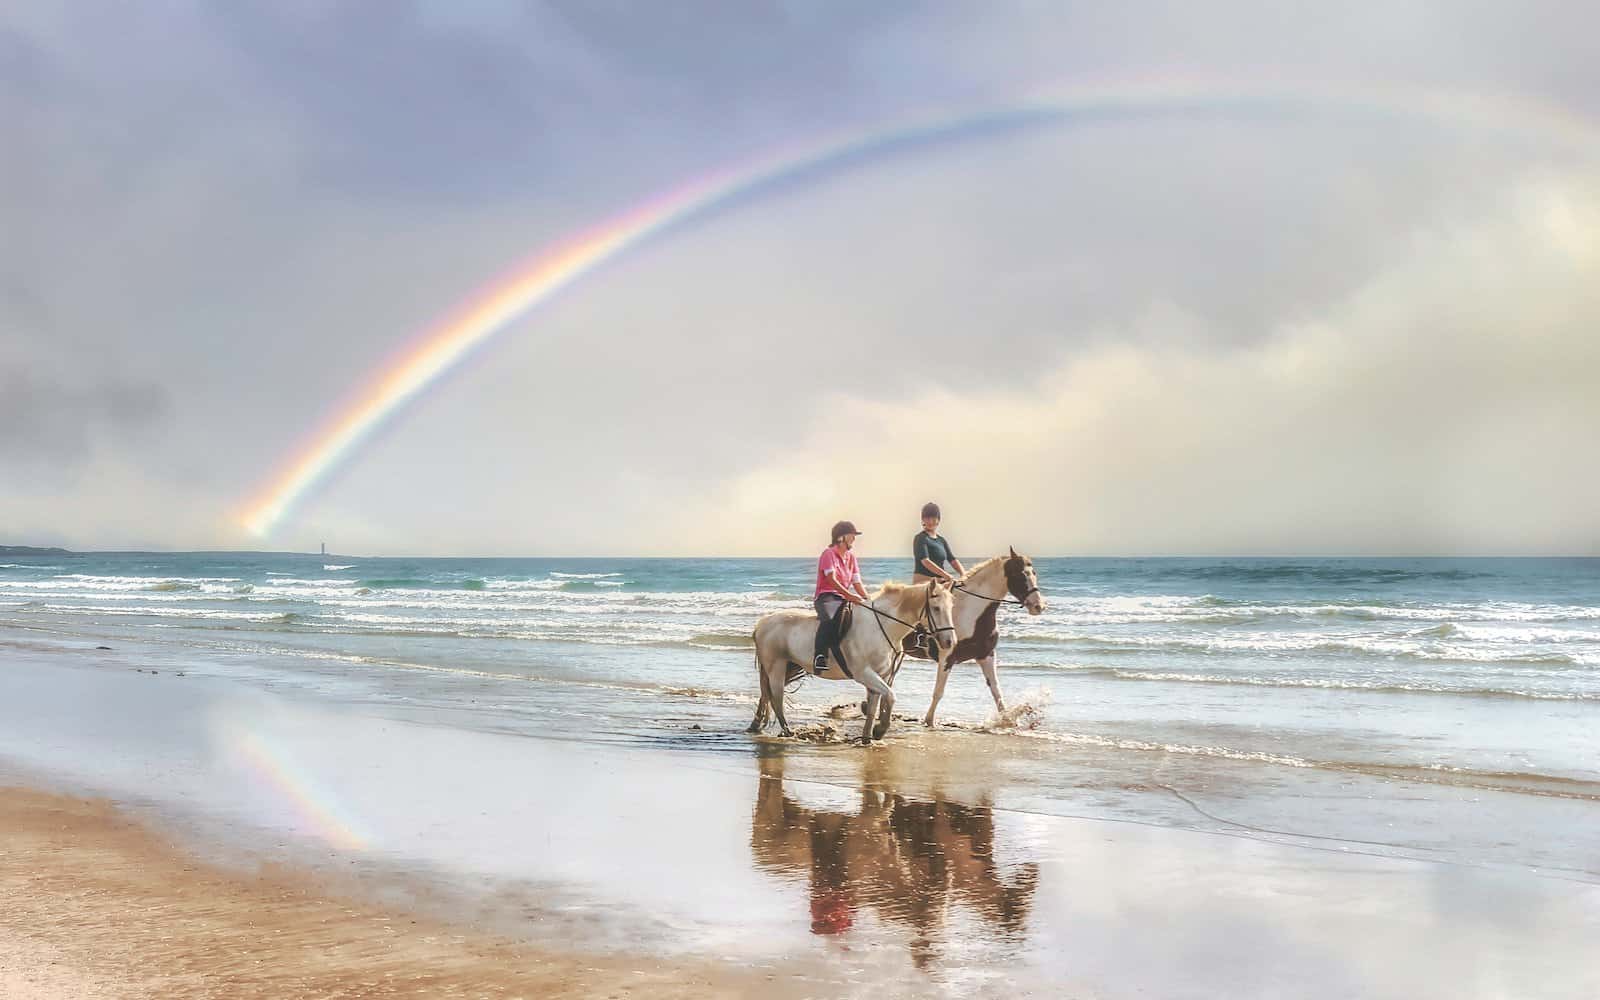 2 men riding horses on beach during daytime